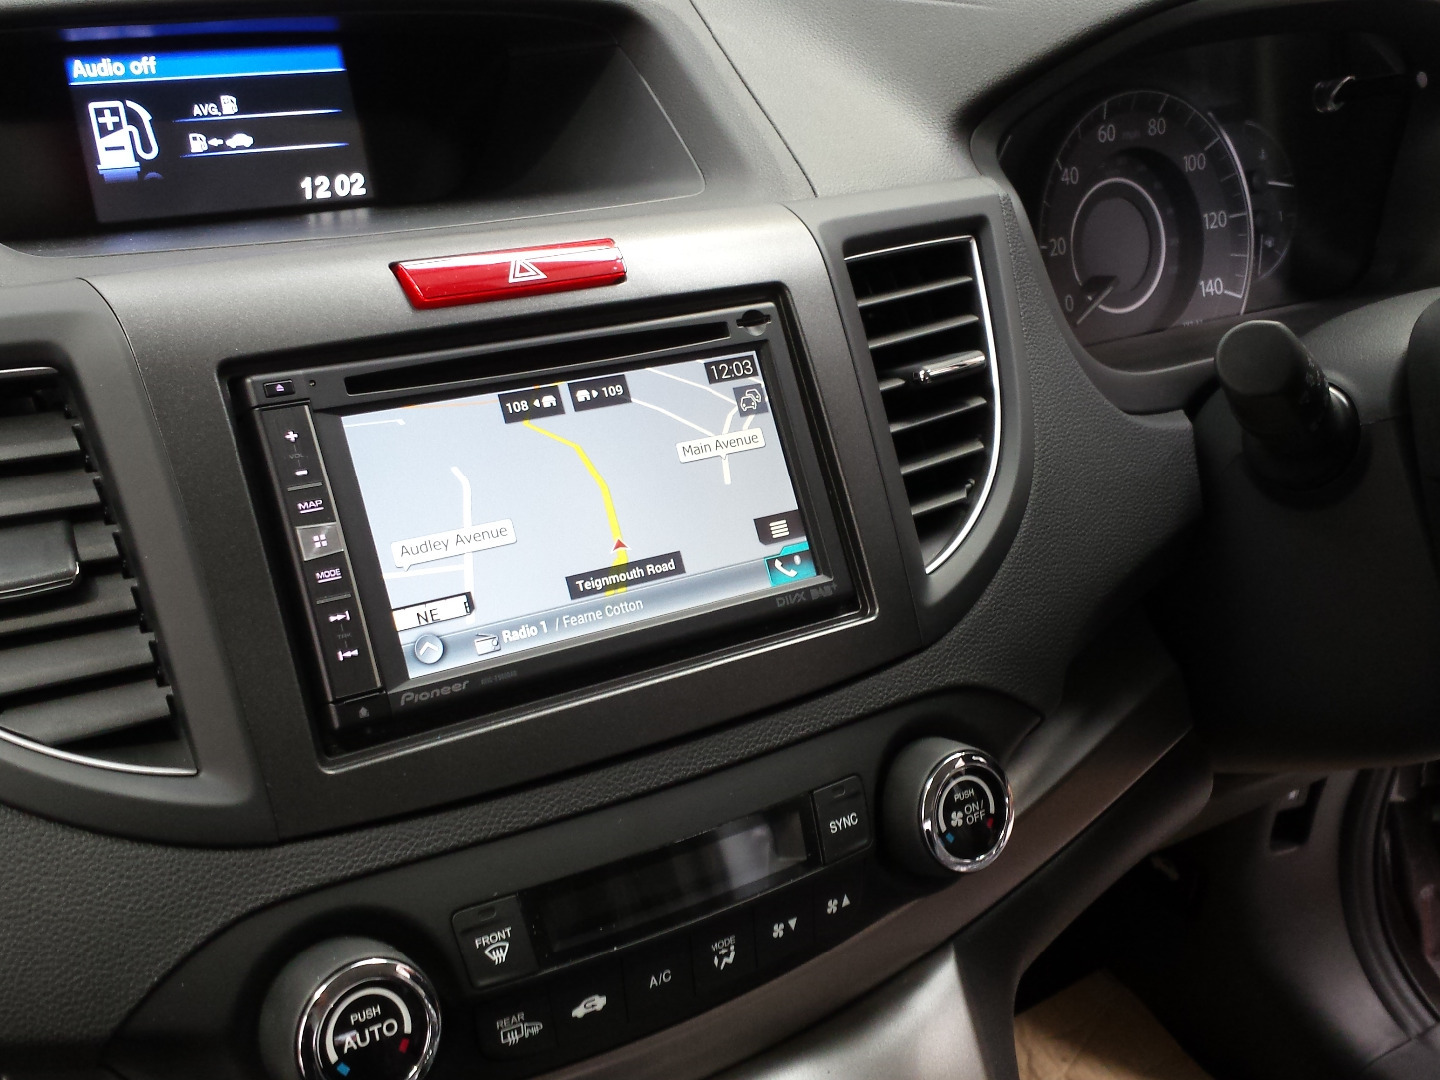 Honda CRV radio